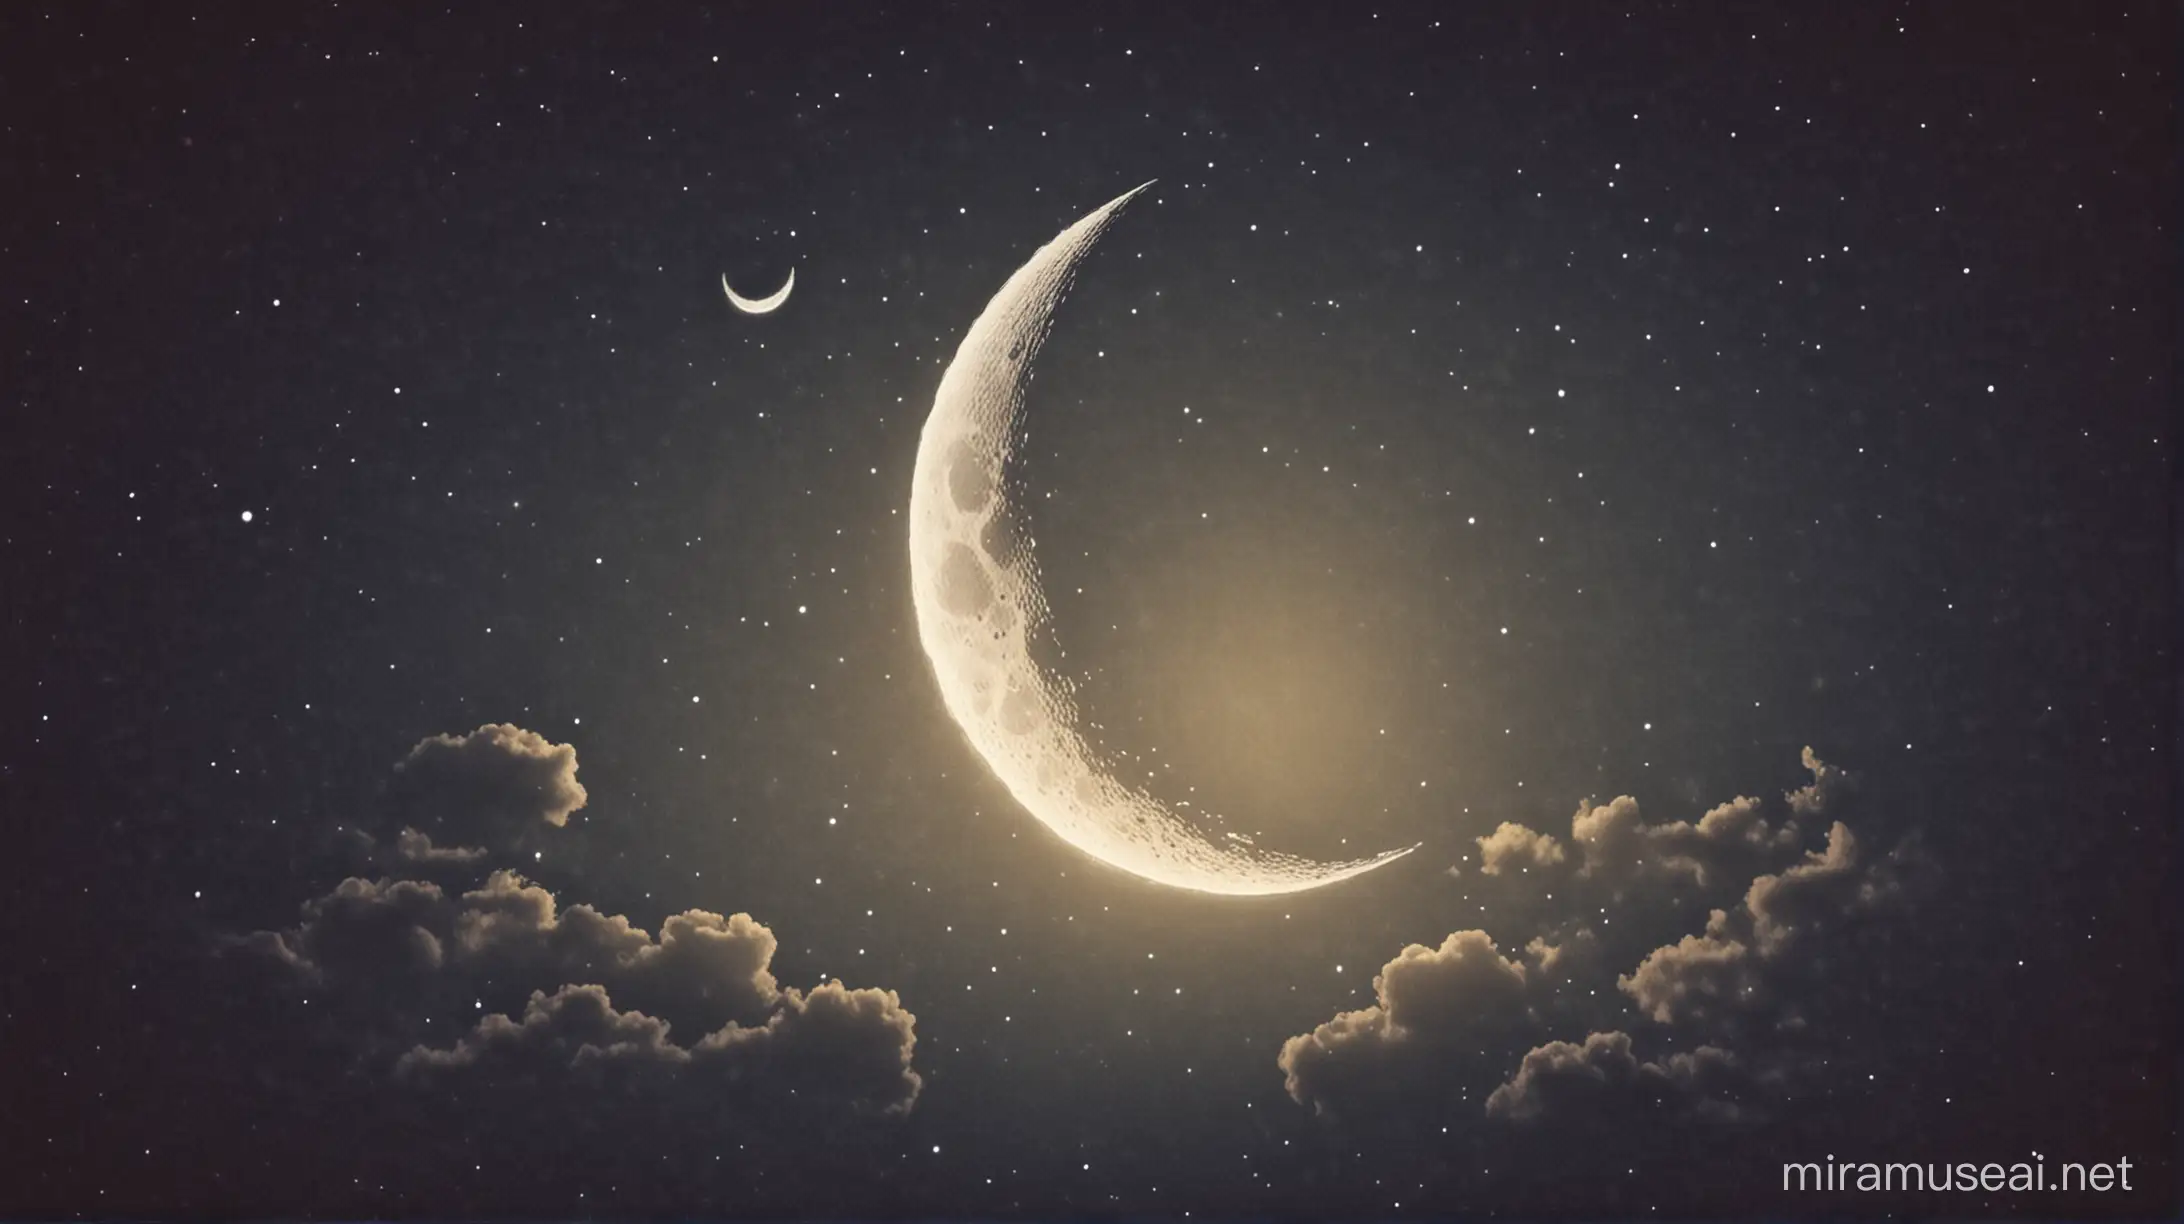 Serene Night Sky with Half Moon Illuminating Clouds